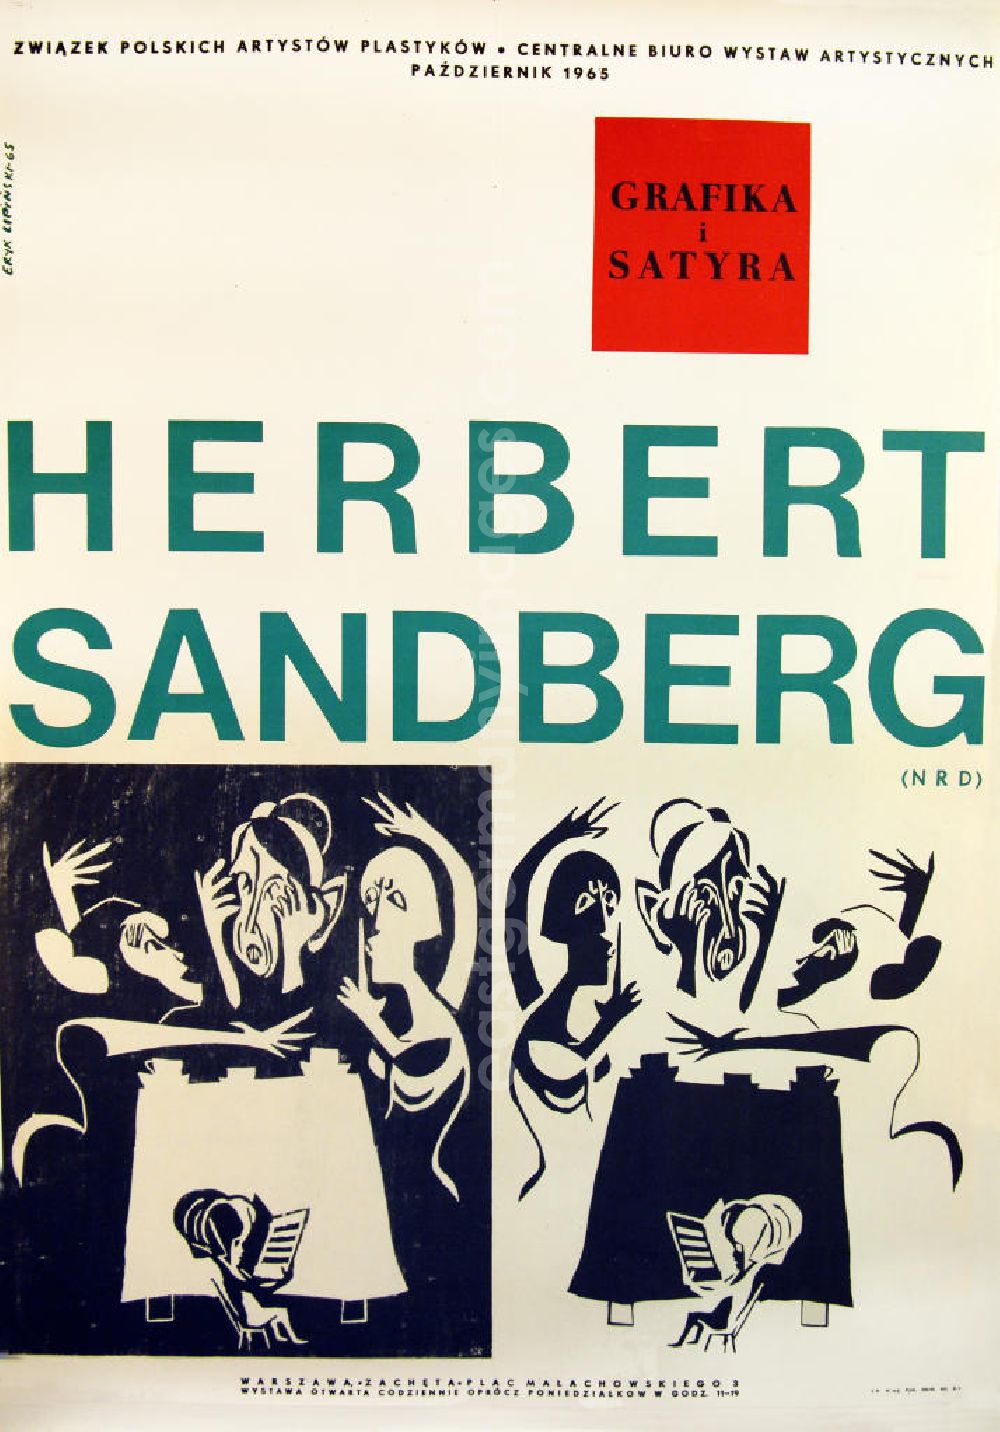 Berlin: Plakat der Ausstellung Grafika i satyra, Herbert Sandberg (NRD) im Oktober 1965 Biuro Wystaw Artystycznych, 48,5x63,